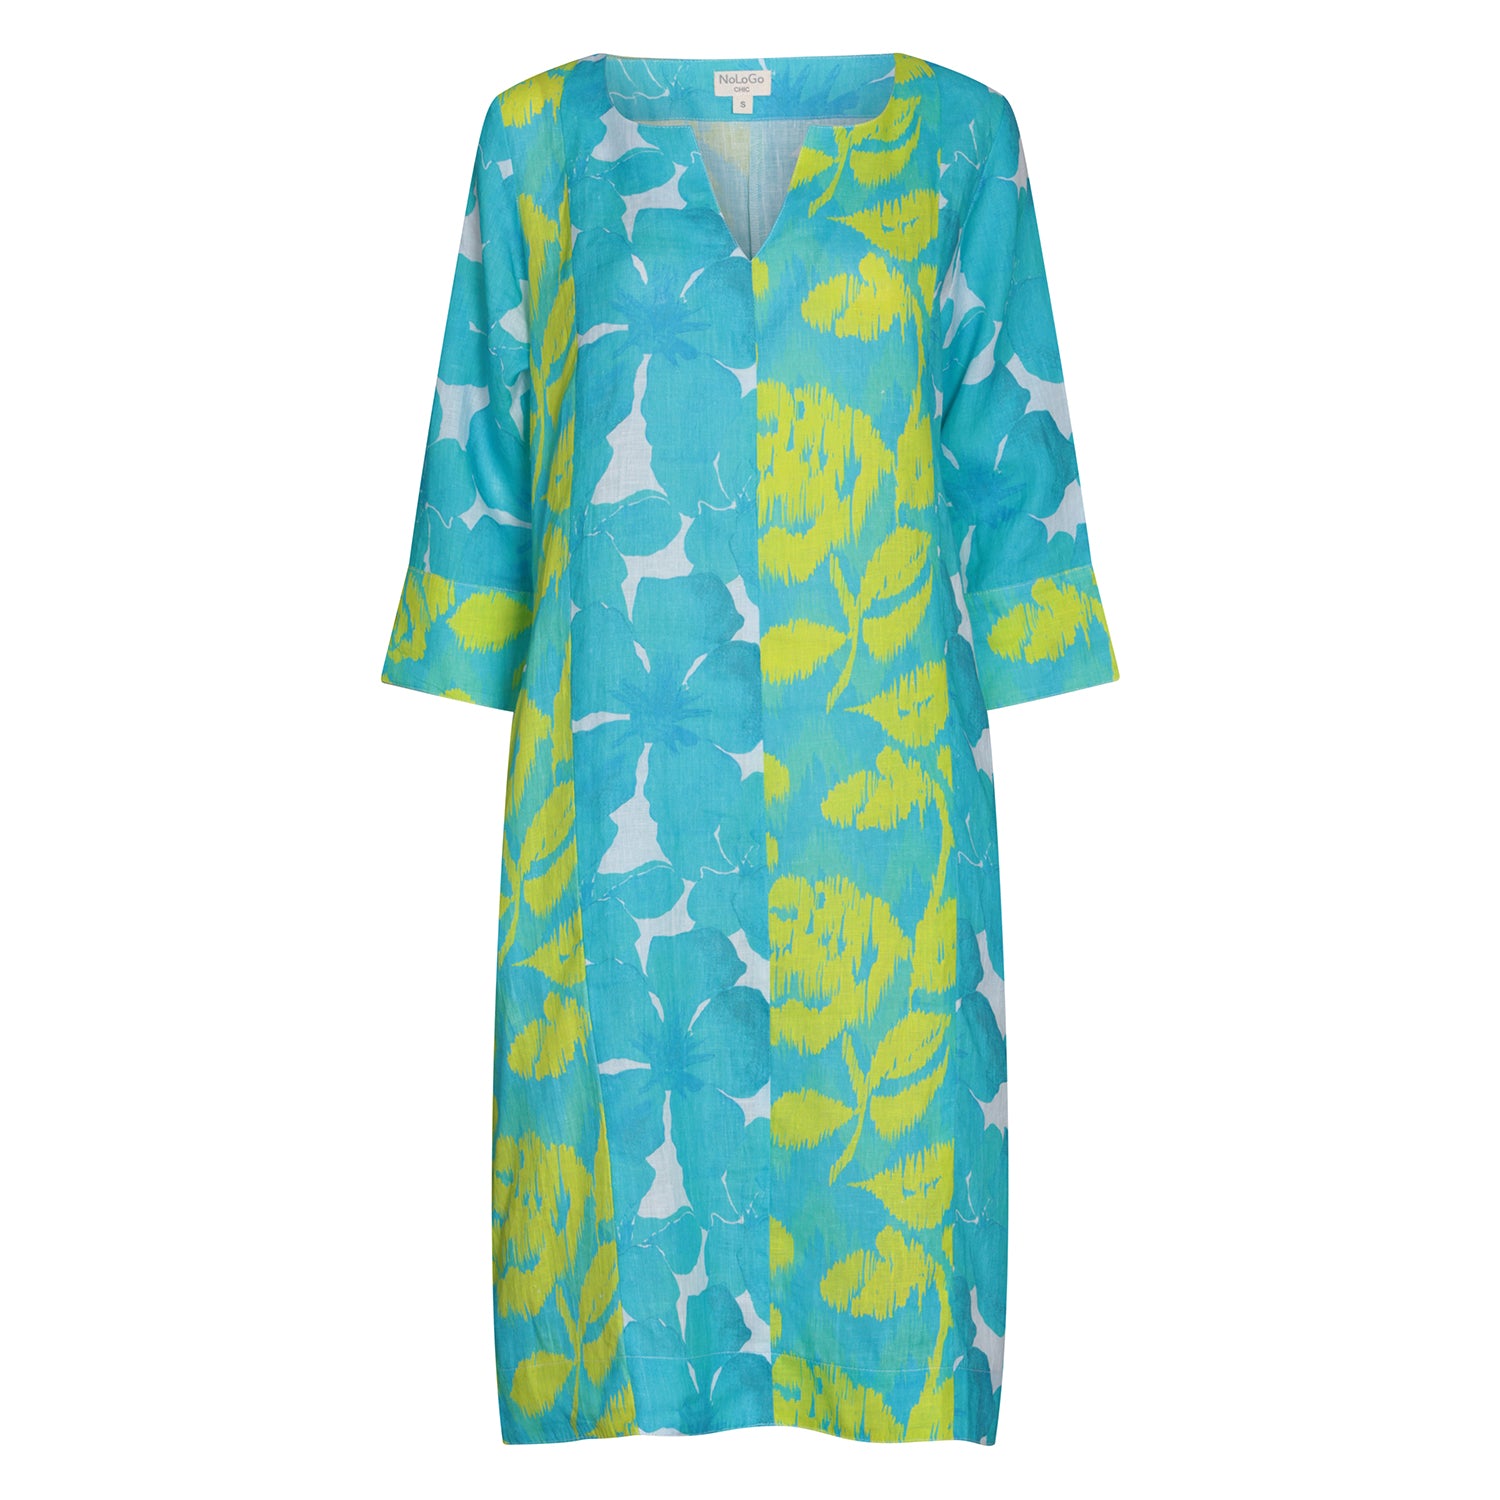 Zen Oleander Ikat Panel Print Tunic Dress - Linen - Turquoise